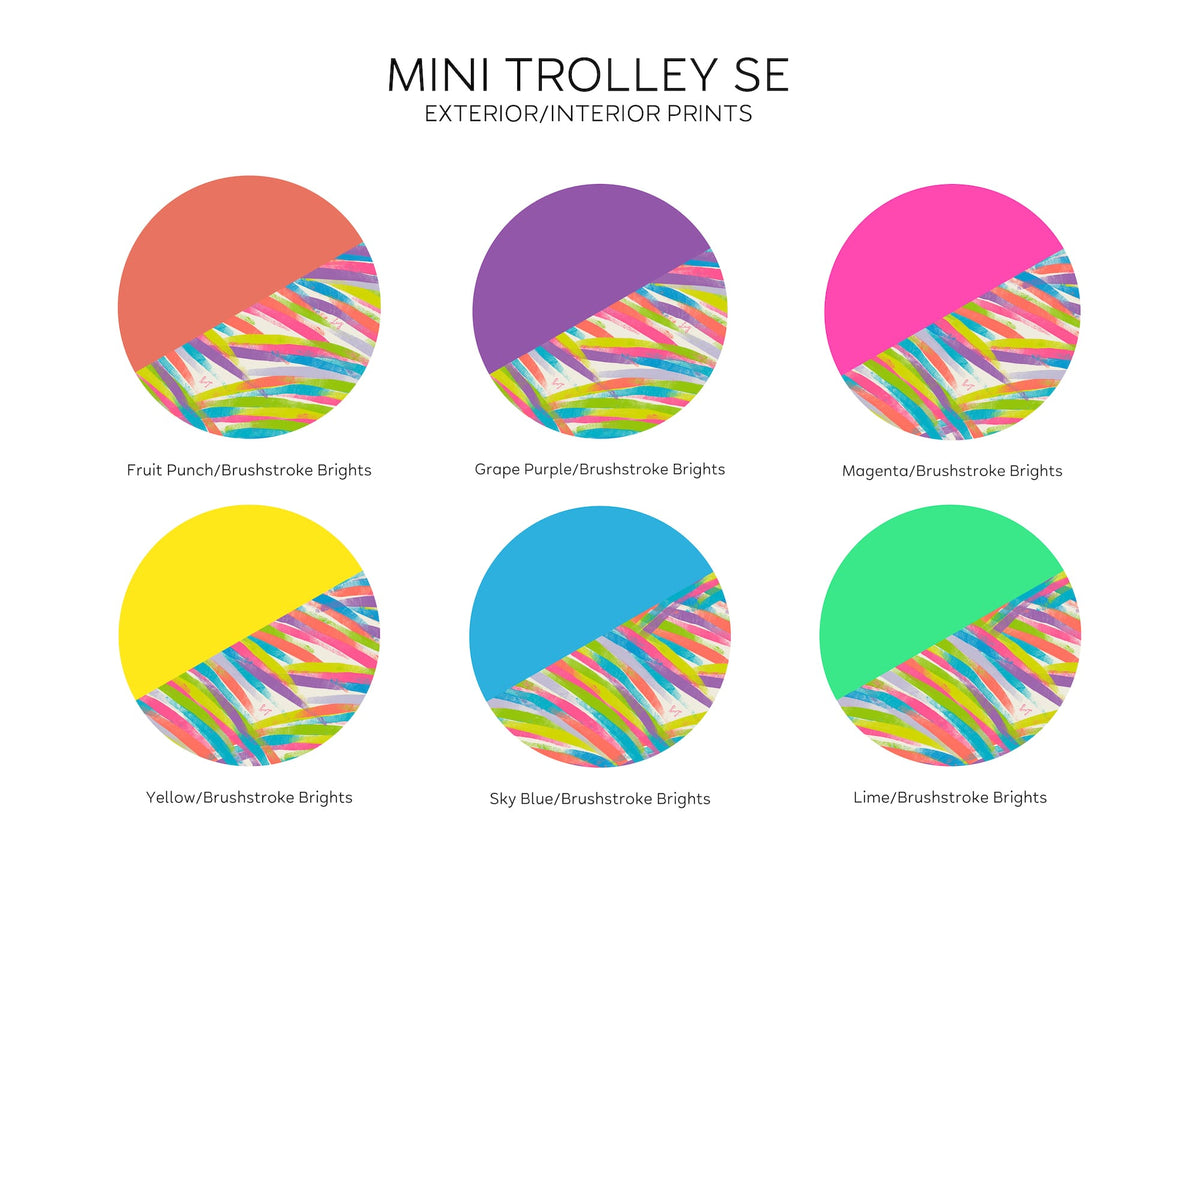 Trolley Mini Cosmetic - Luglife.com